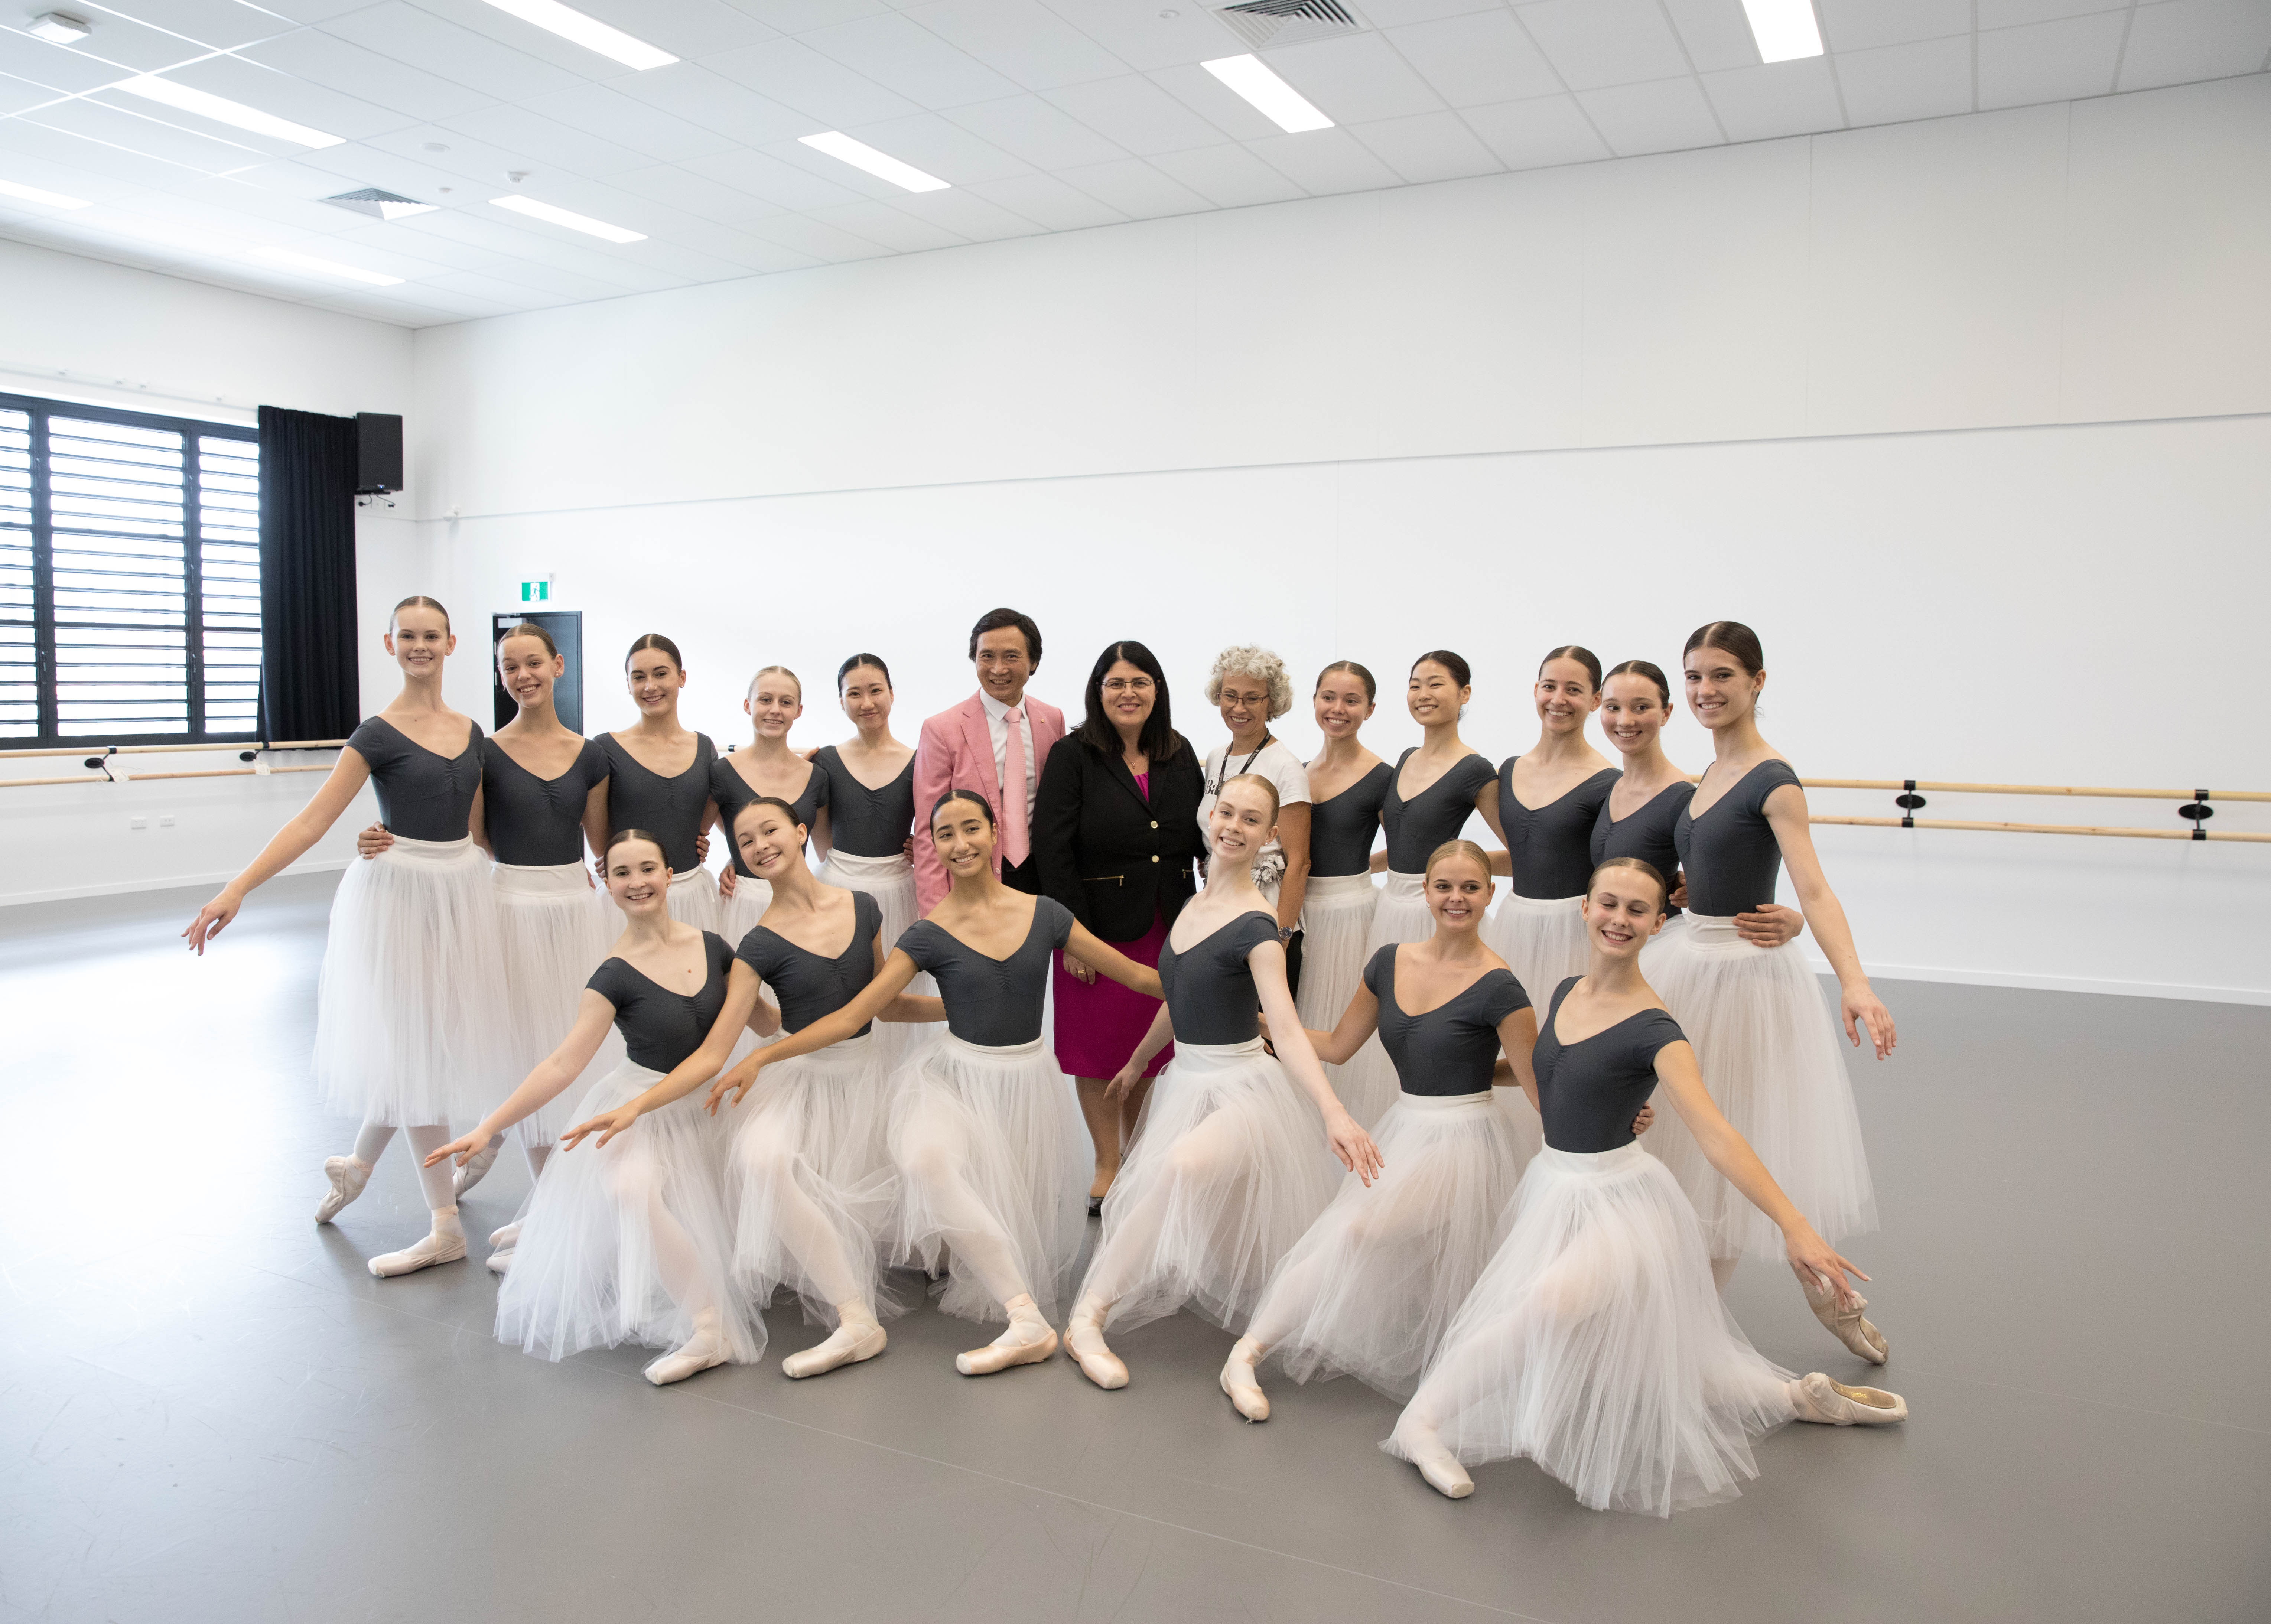 Worldclass ballet academy opens at Queensland's Kelvin Grove State